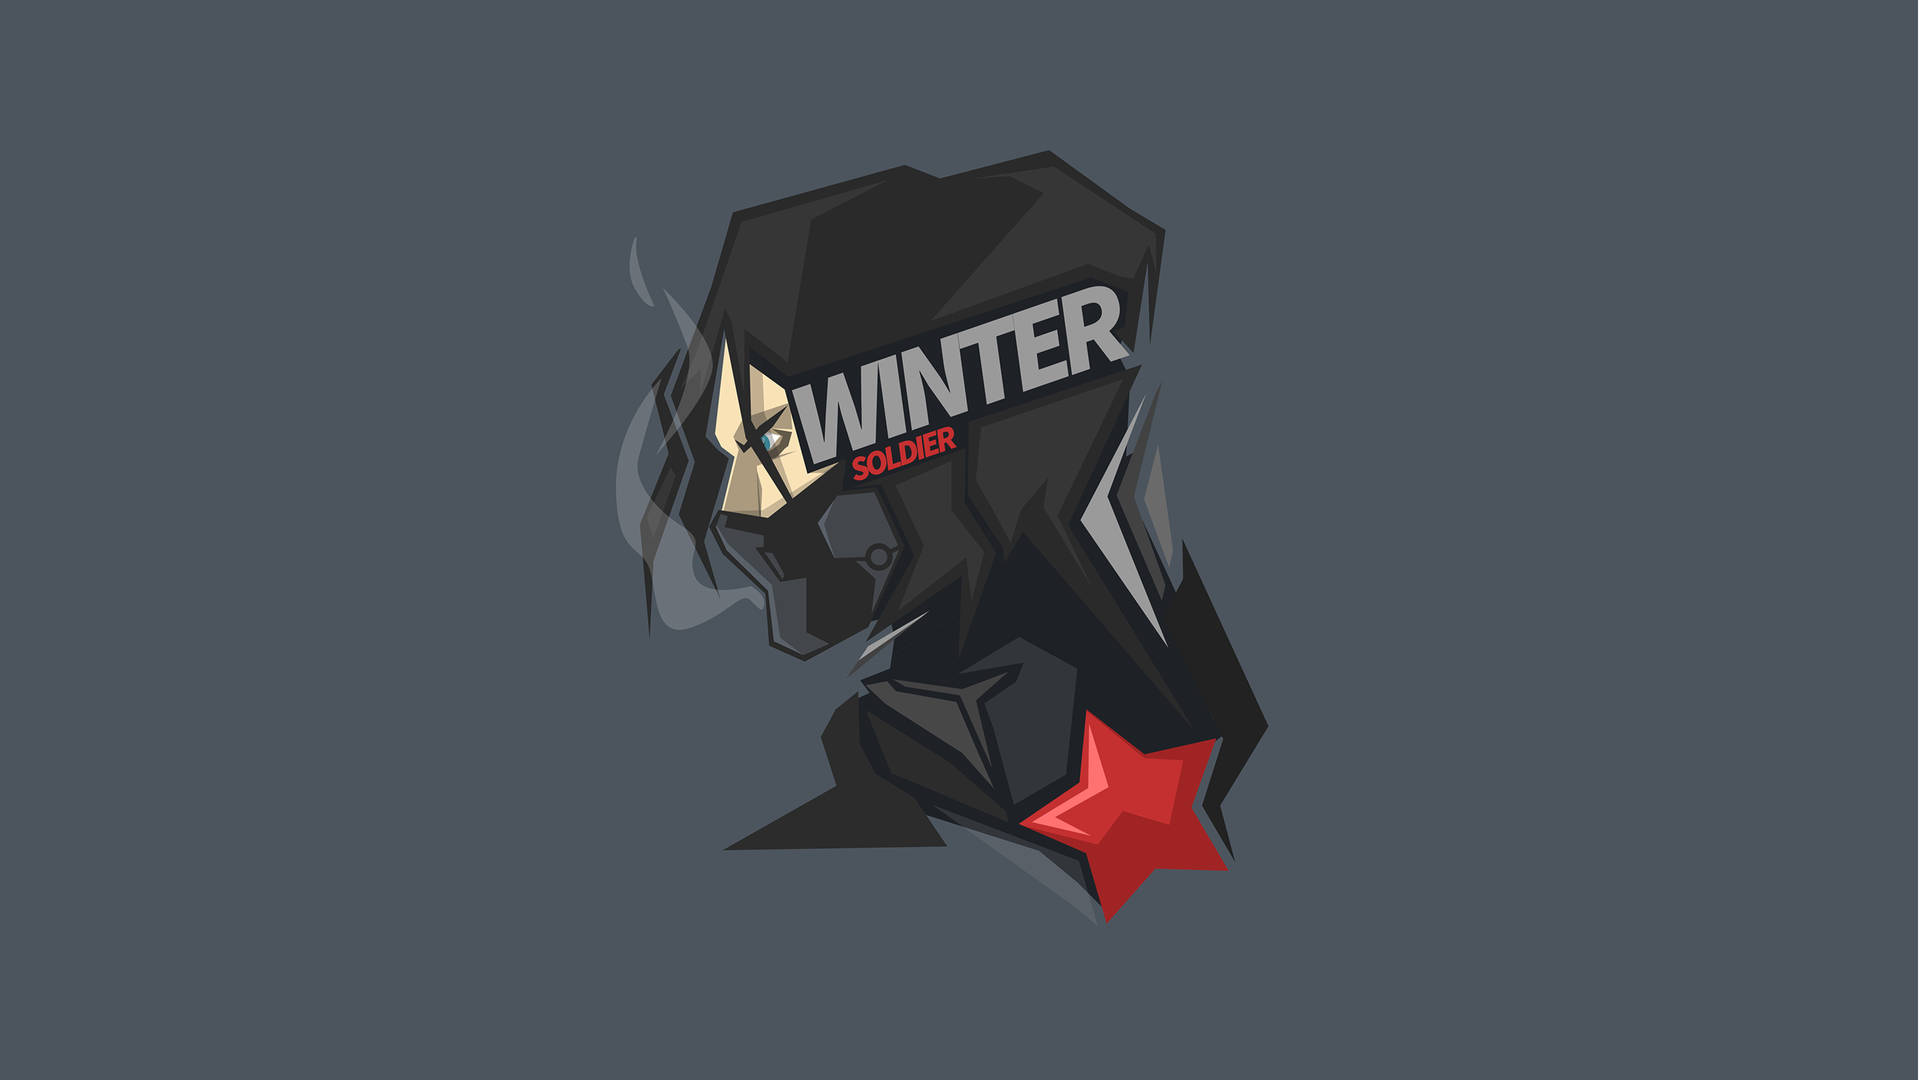 Winter Soldier's Red Star